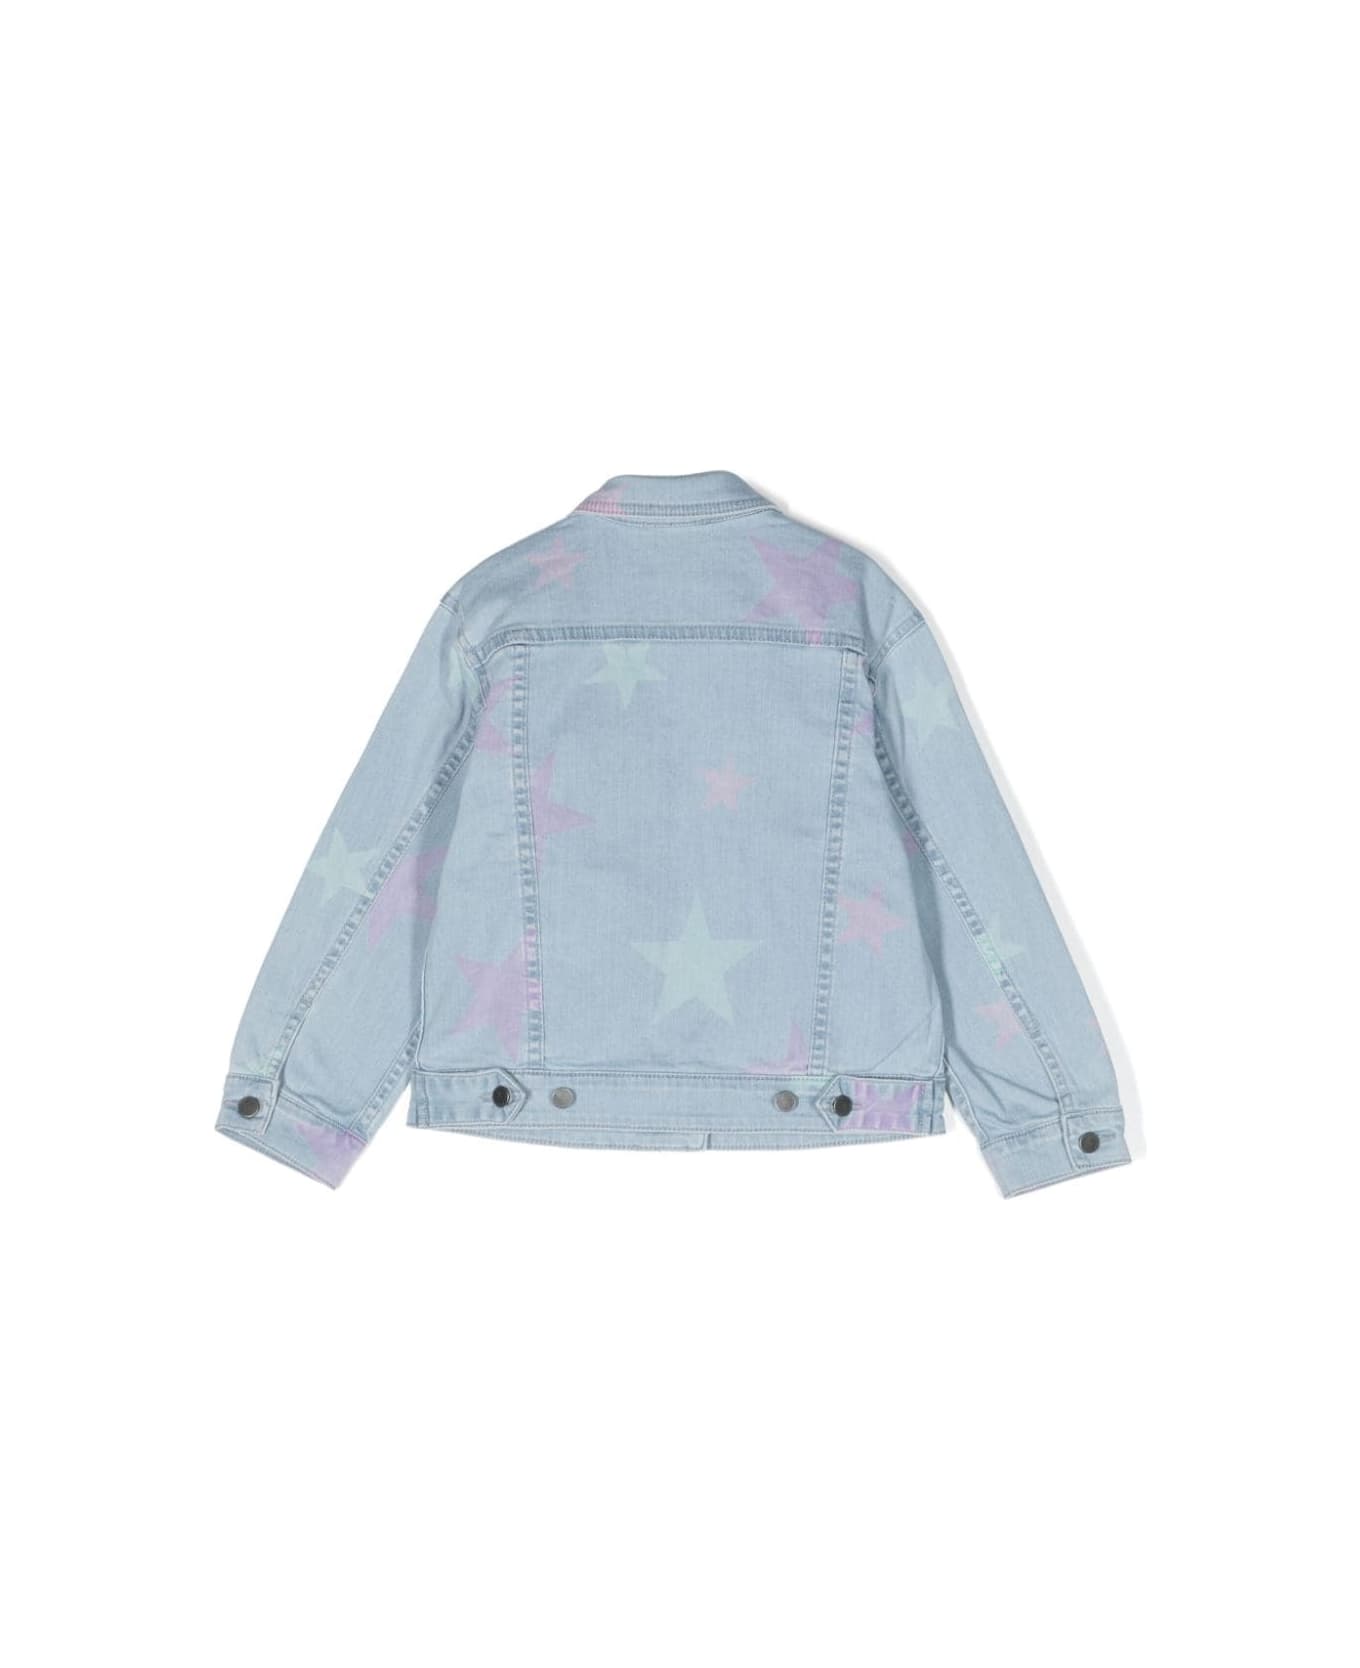 Stella McCartney Kids Denim Jacket With Star Print - Blue